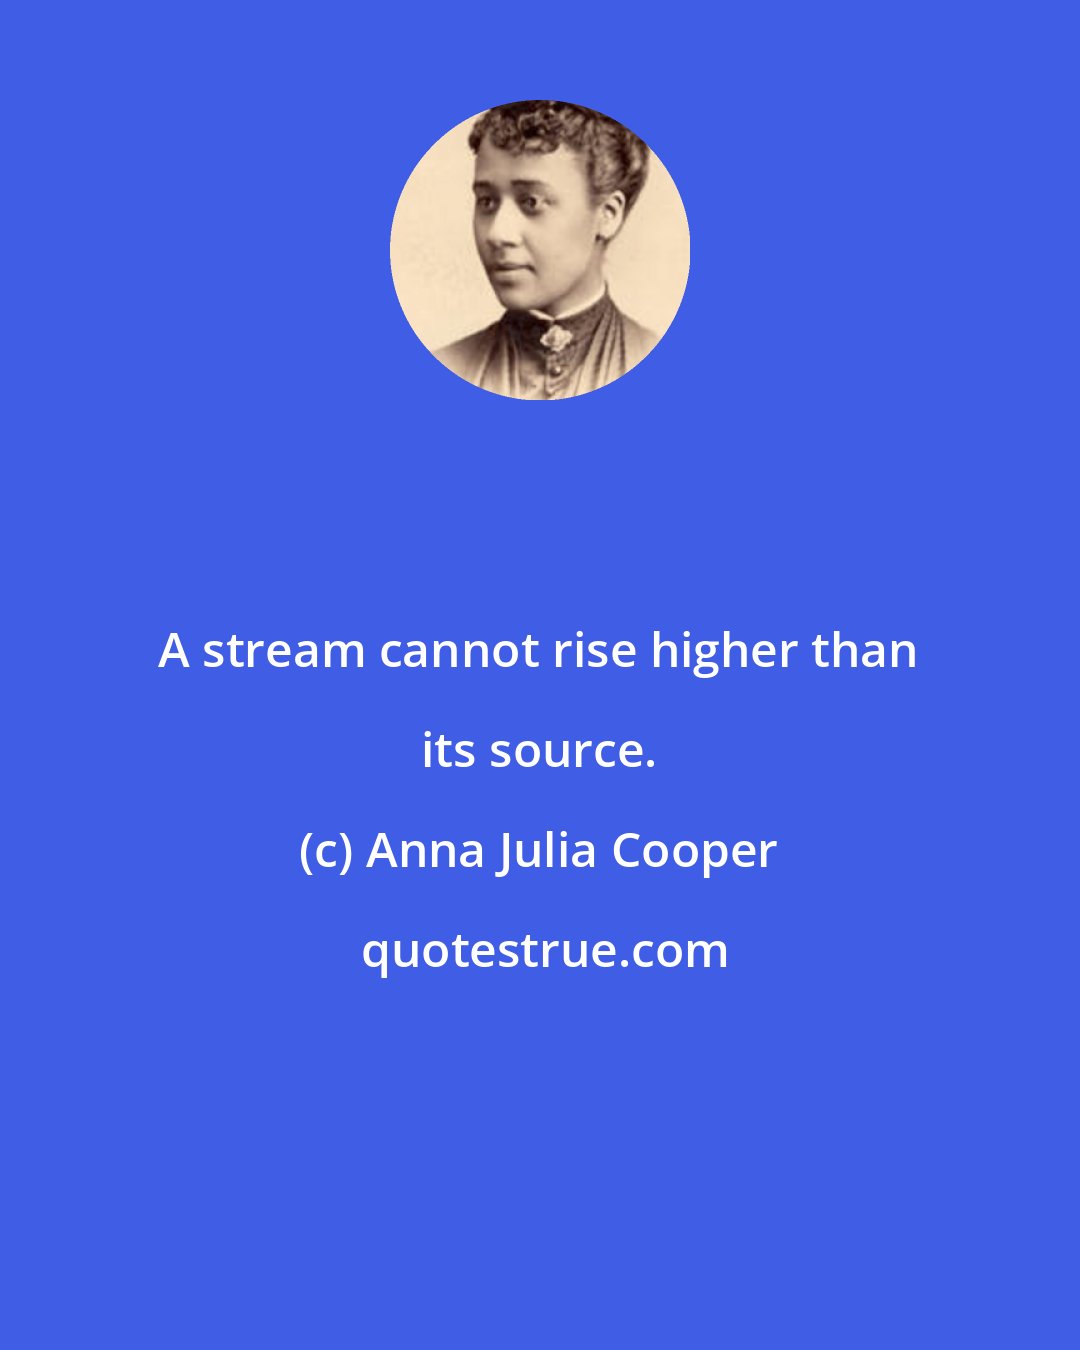 Anna Julia Cooper: A stream cannot rise higher than its source.